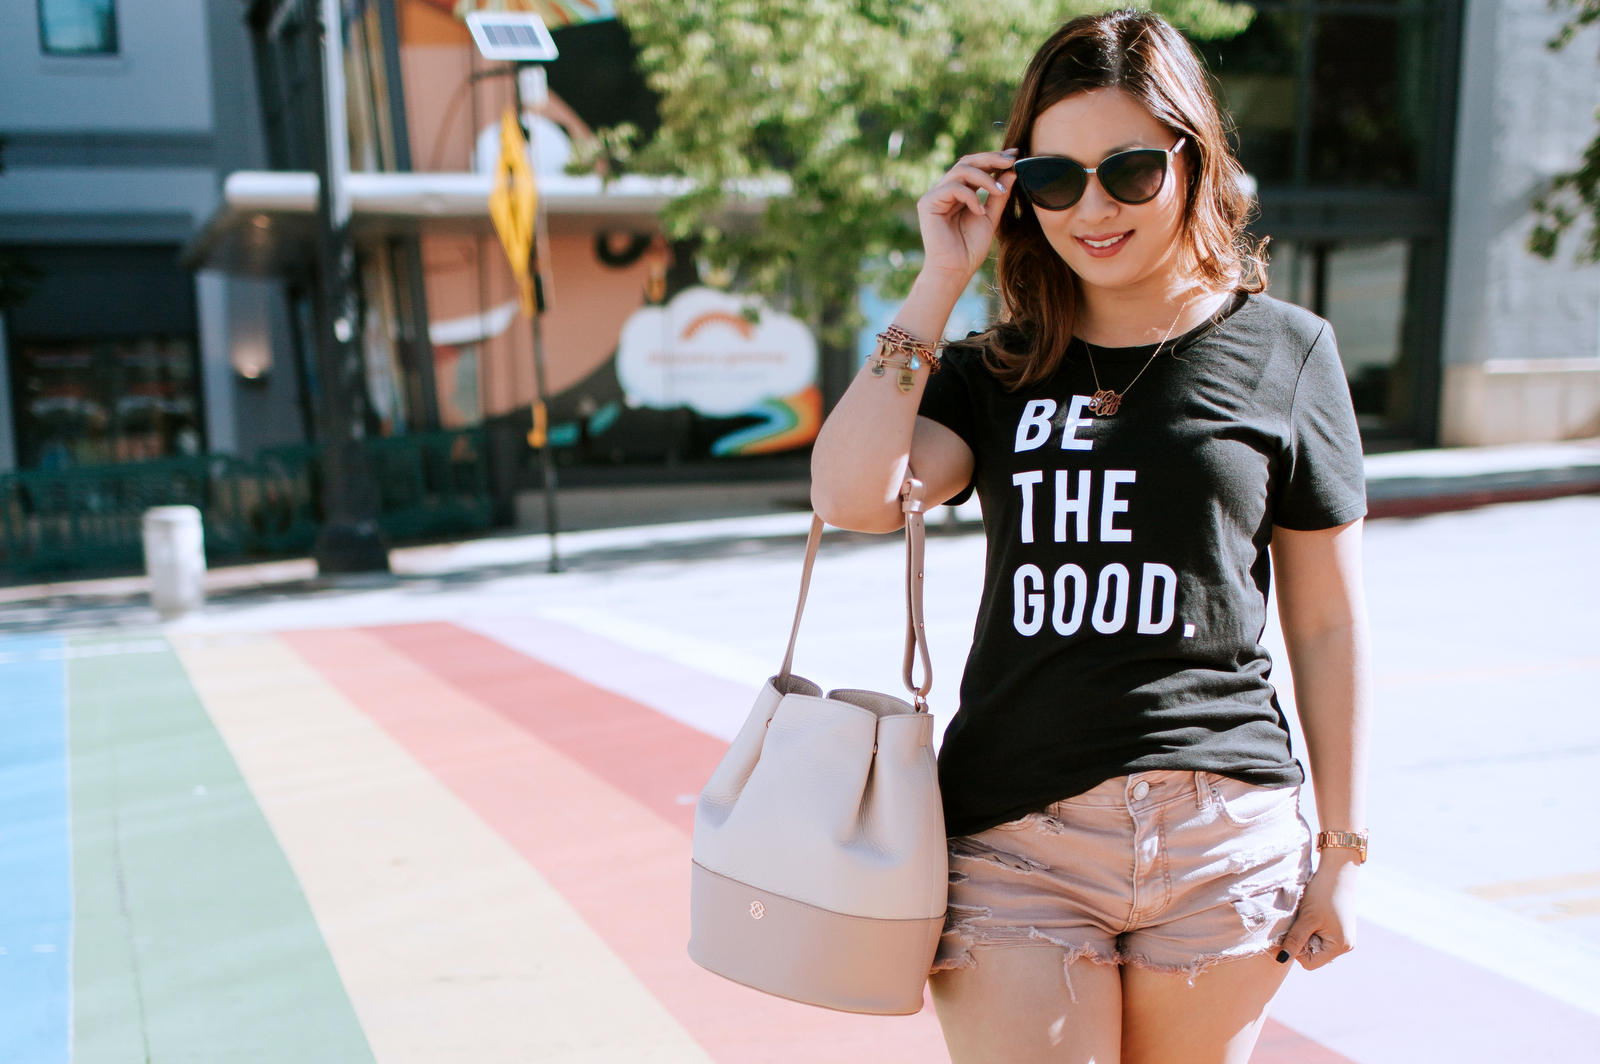 Why I Choose To Be The Good by Utah fashion blogger SandyALaMode